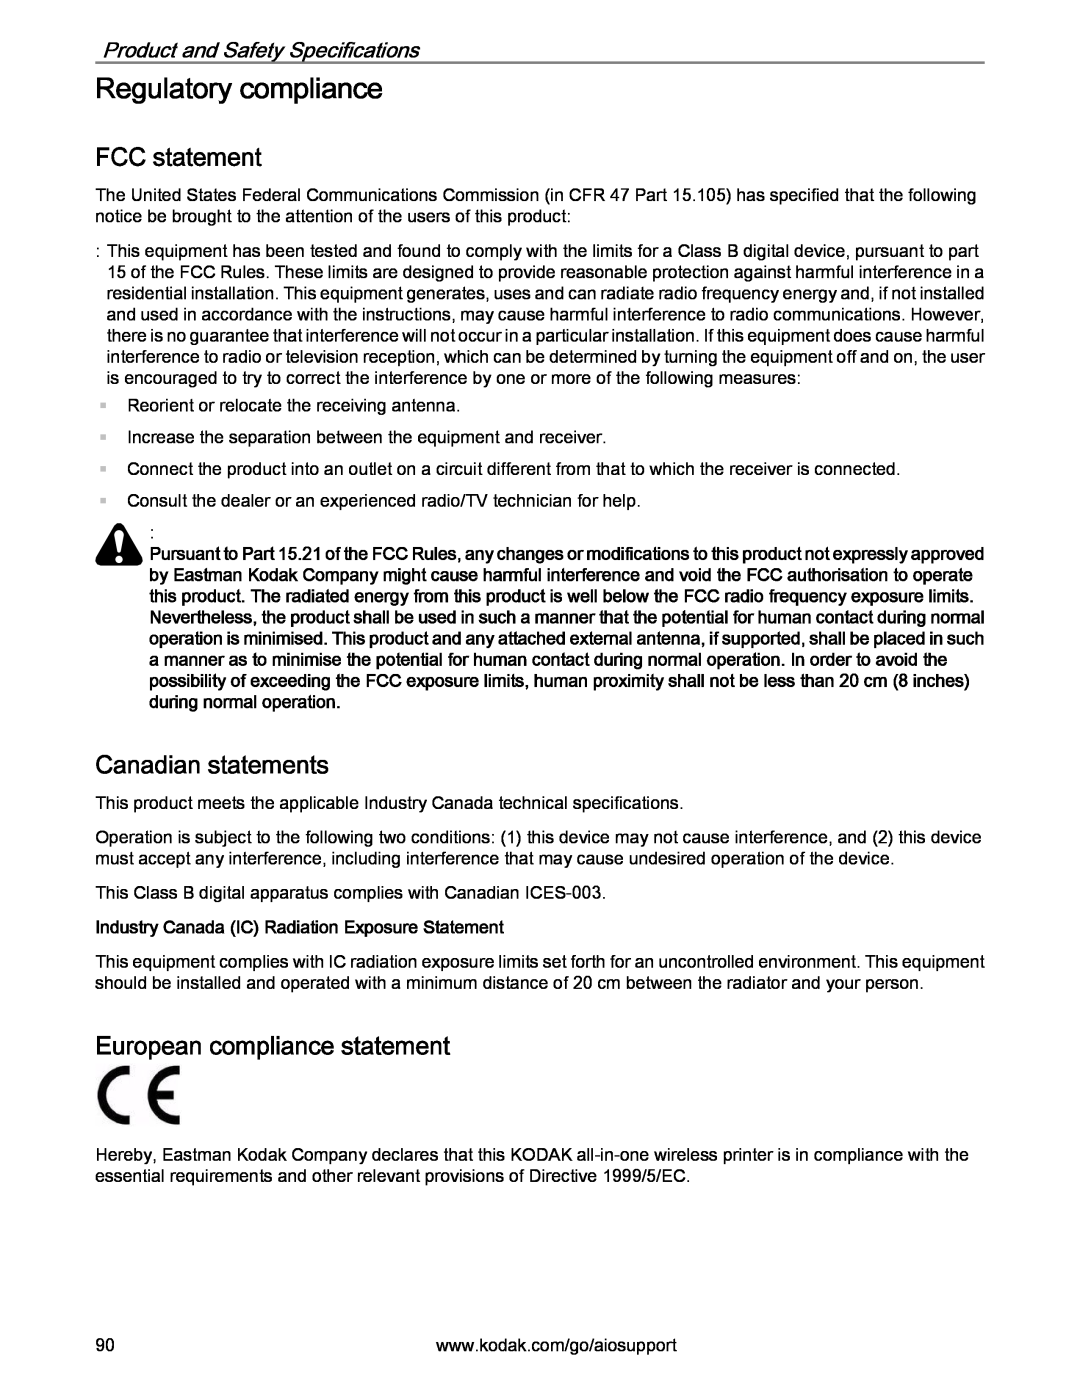 Kodak 2.2 manual Regulatory compliance, FCC statement, Canadian statements, European compliance statement 